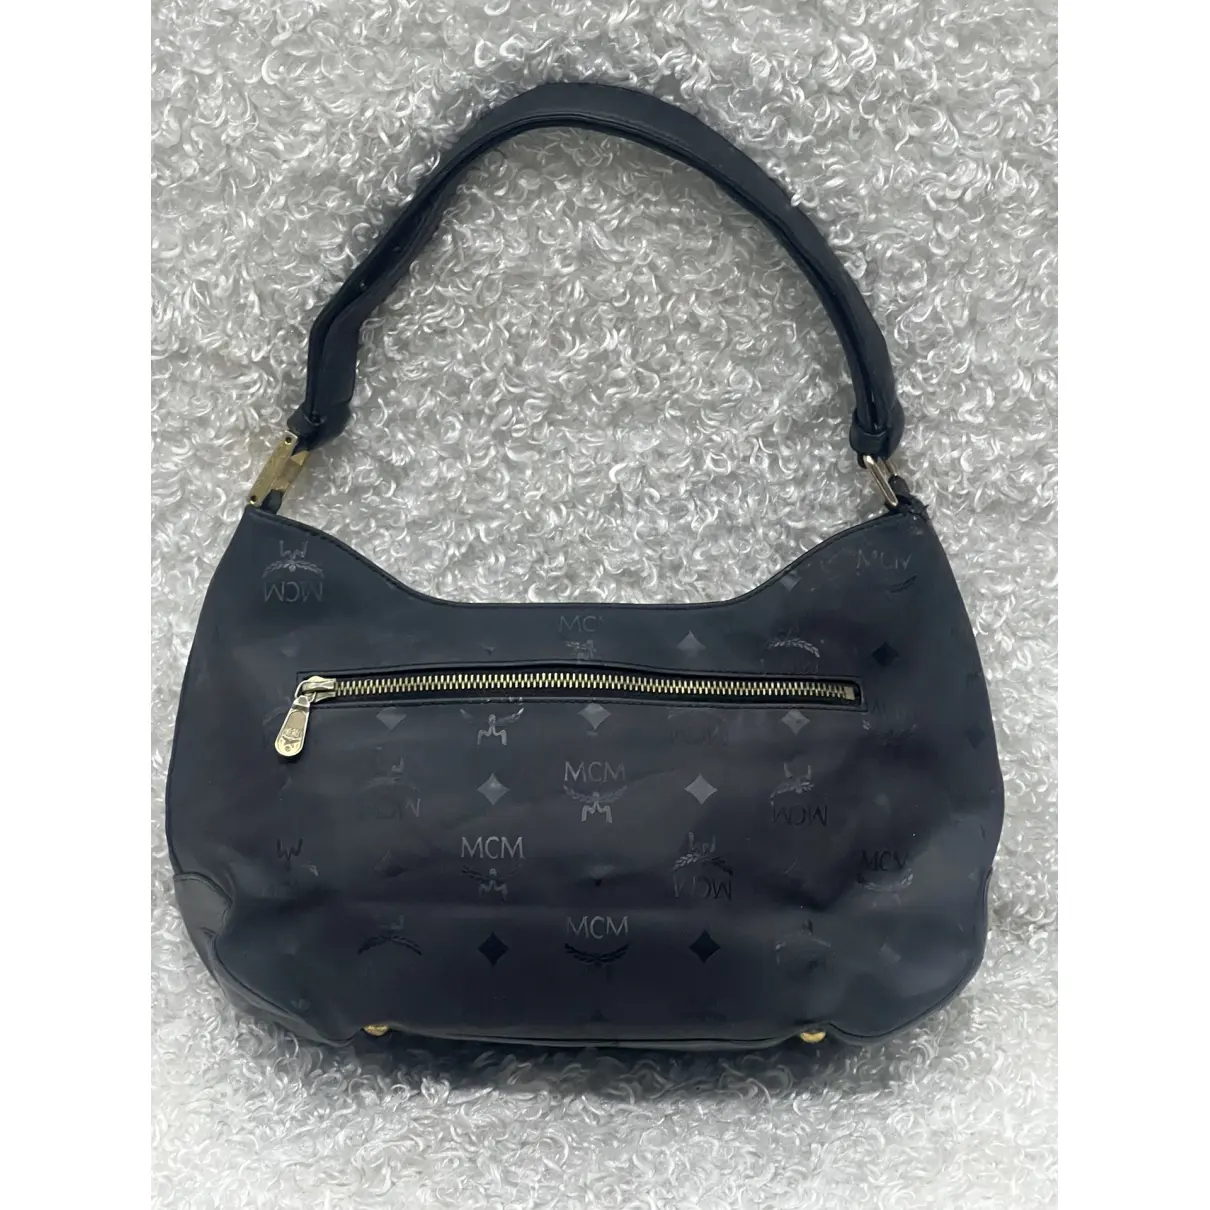 Buy MCM Millie cloth handbag online